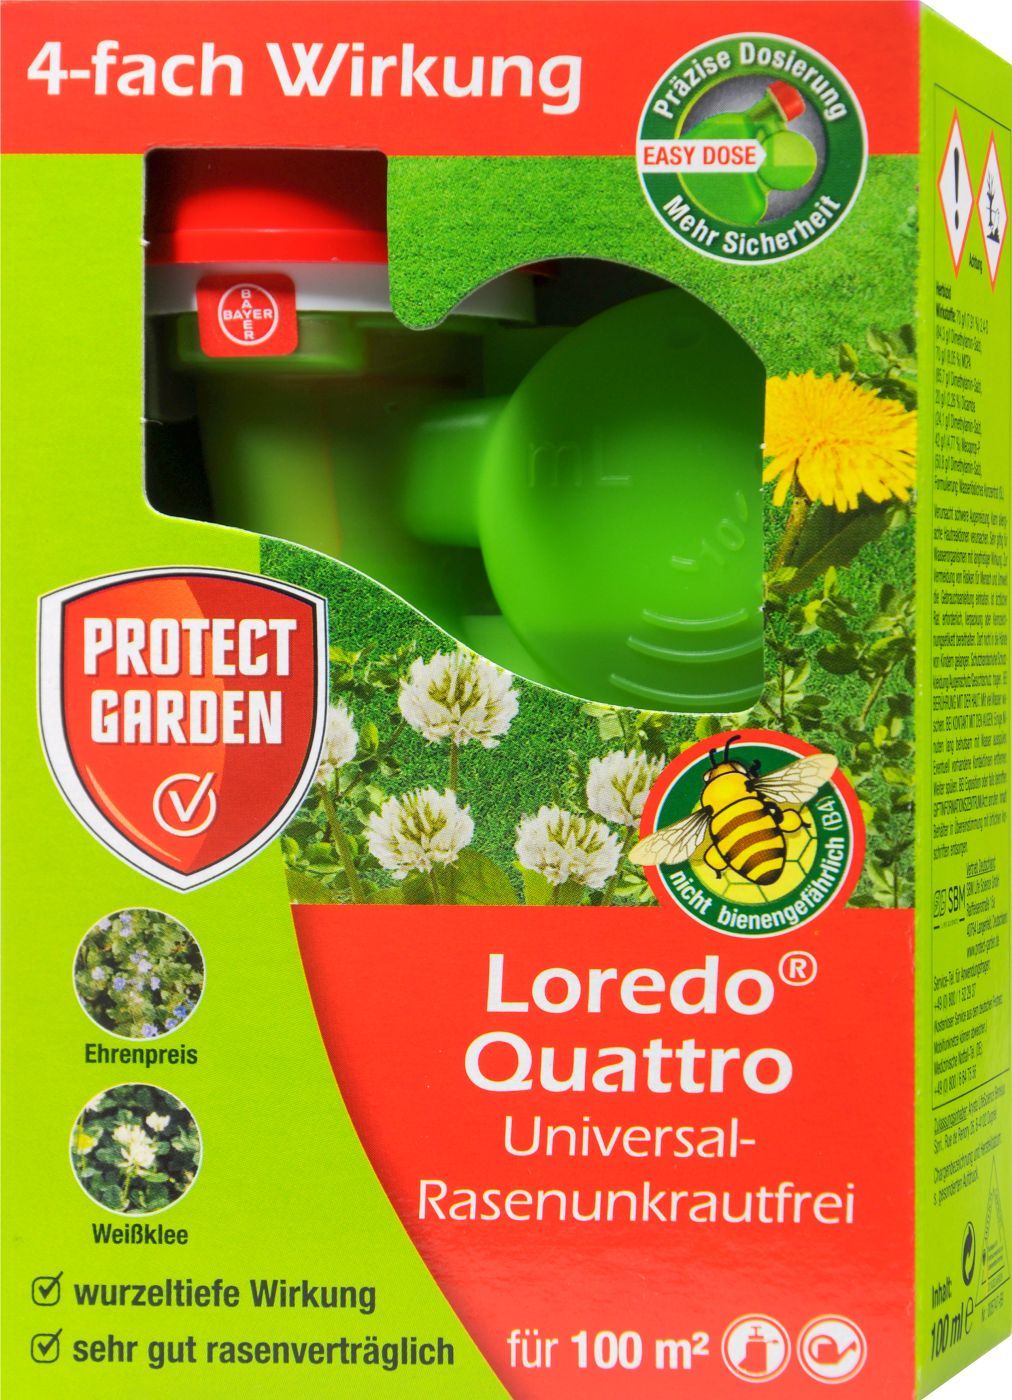 Protect Garden Loredo Quattro Univ.Rasenunkrautfrei - 100 ml